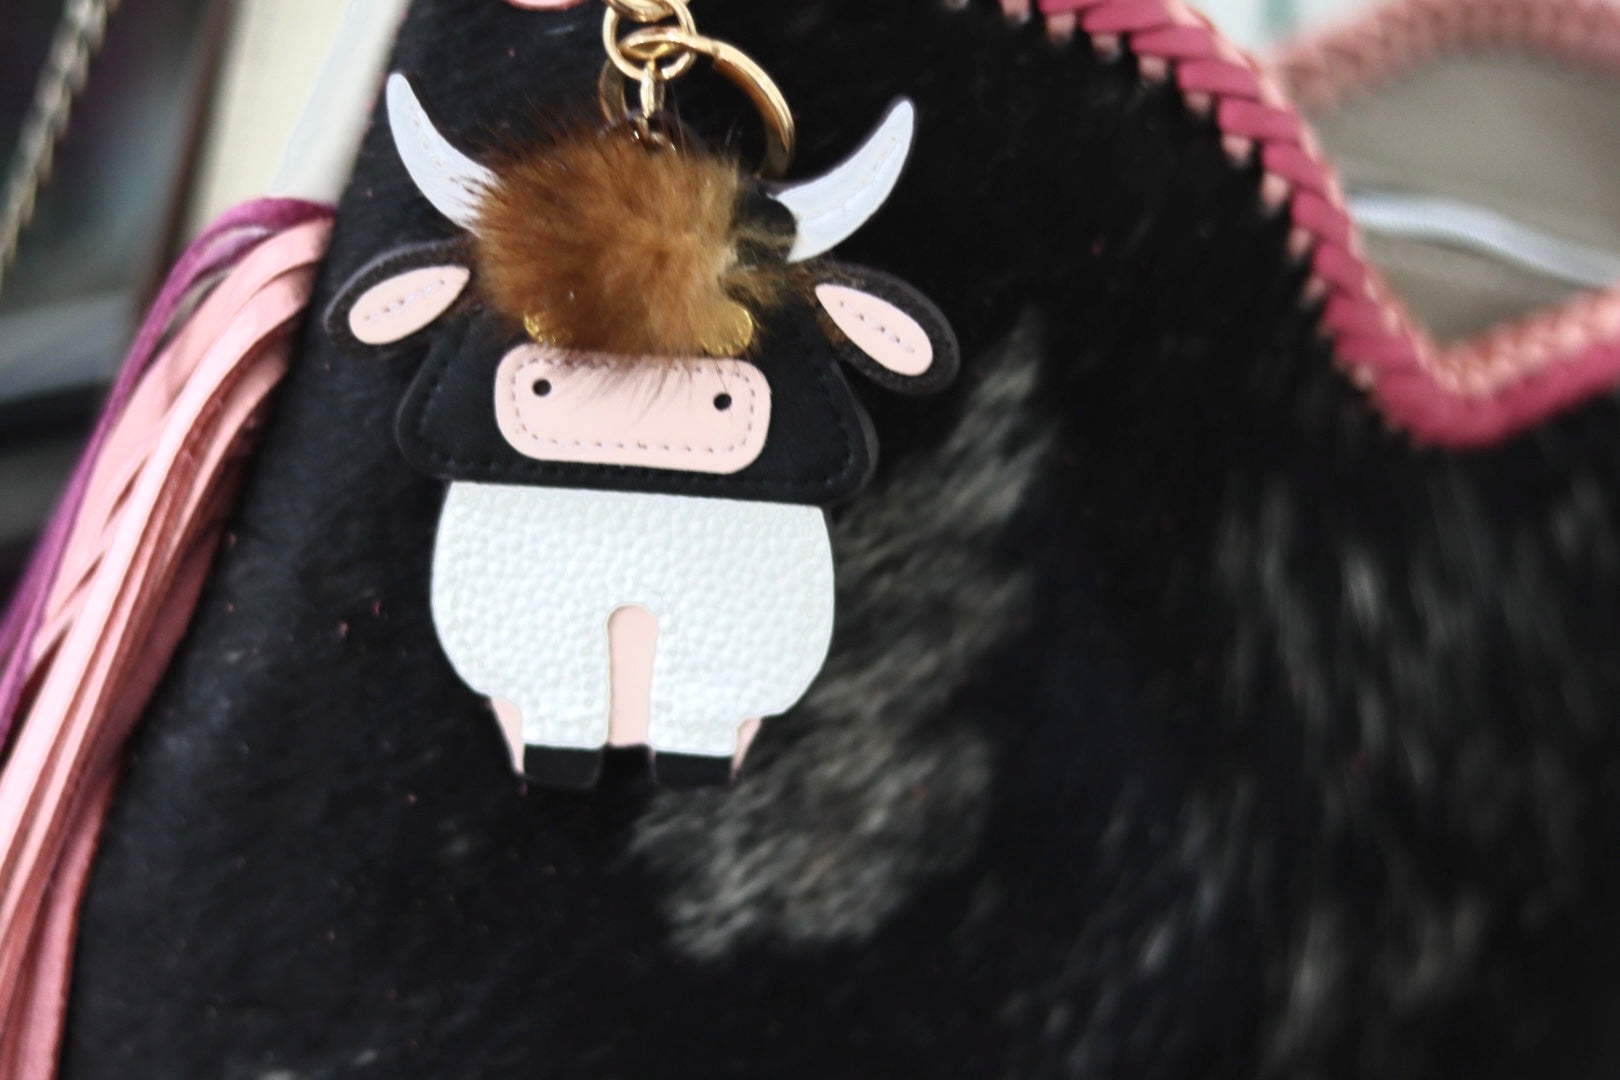 LV Cow KeyChain Bag Charm Decorative Accessory